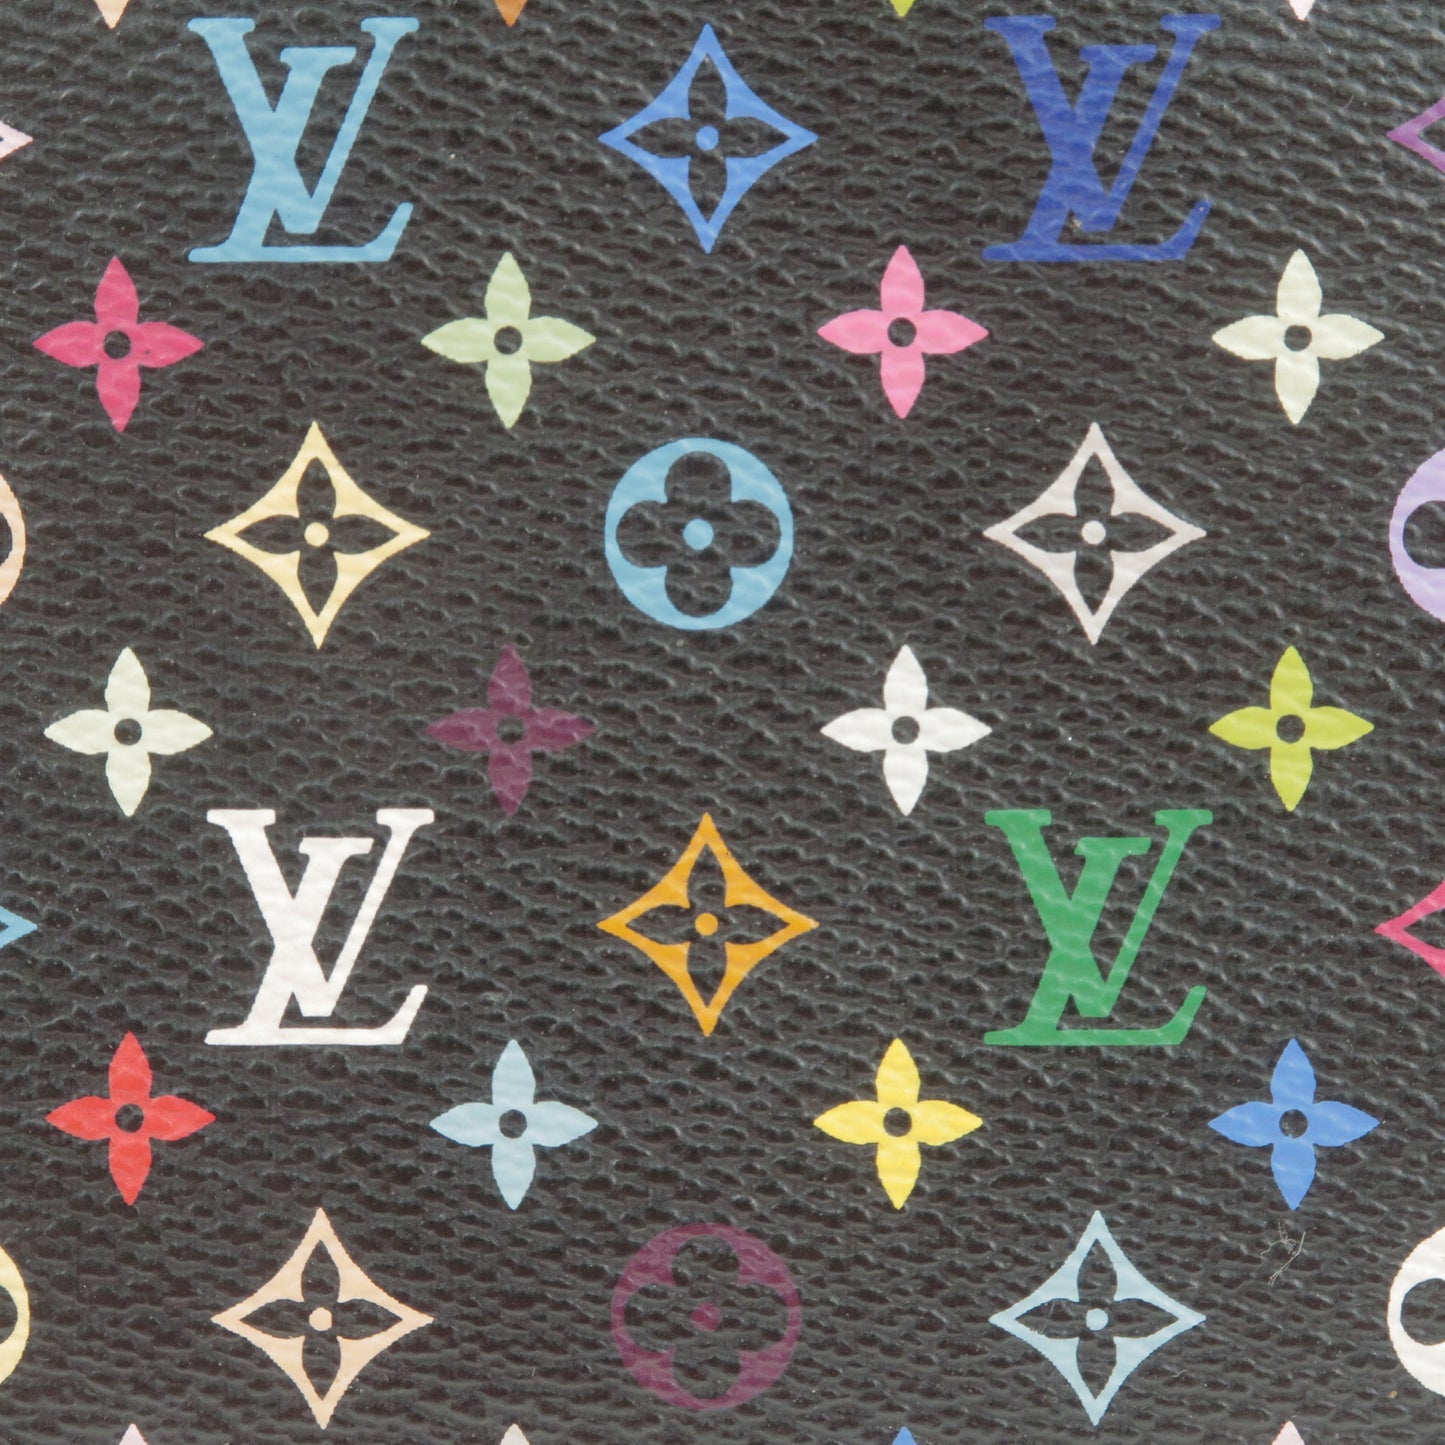 Louis Vuitton Monogram Multi Color Pochette Cosmetic M47355